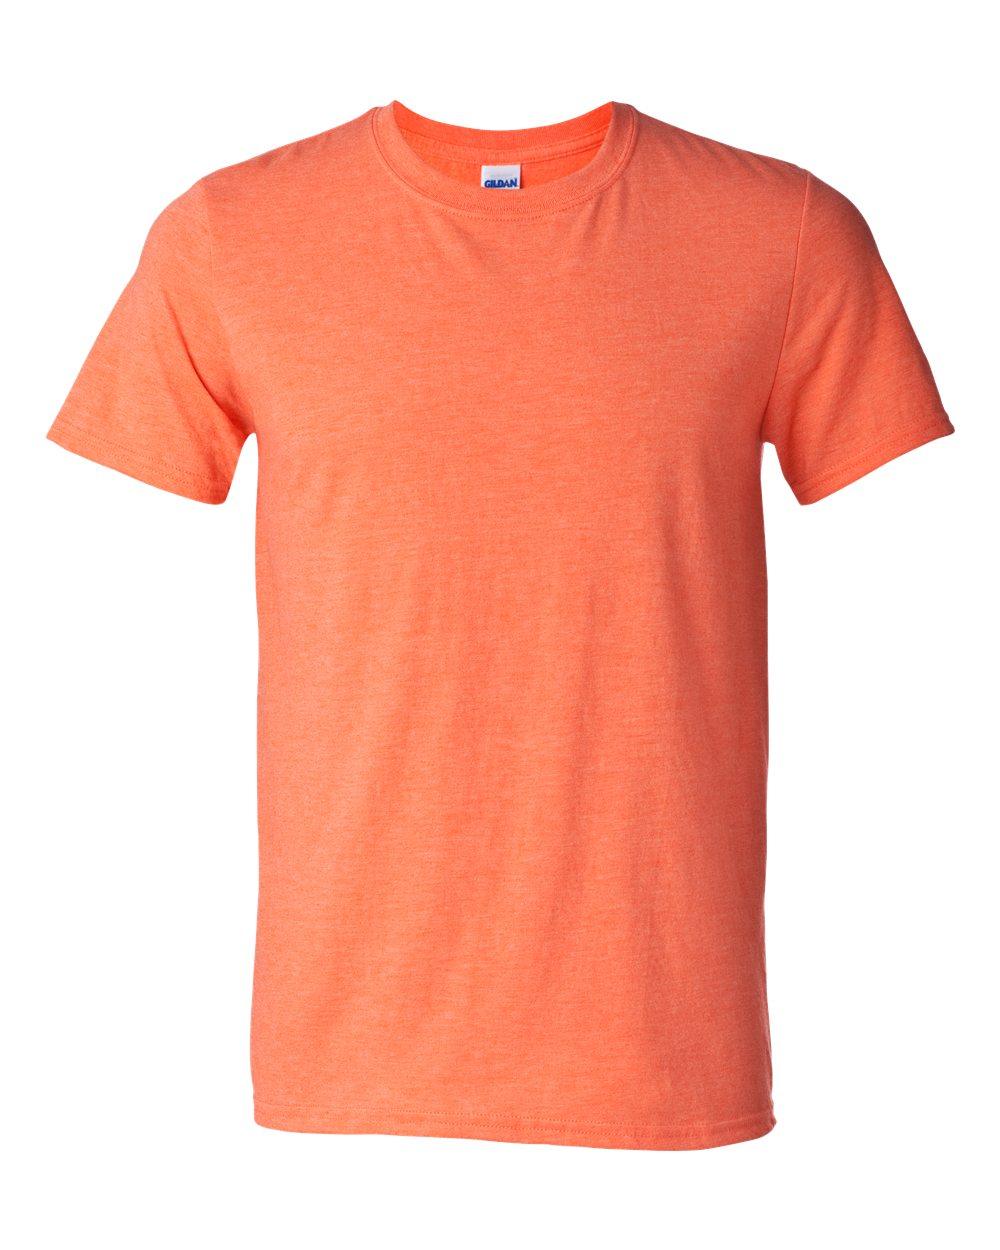 Do bulk t shirt design for your print on demand business by Tshirt_artist1